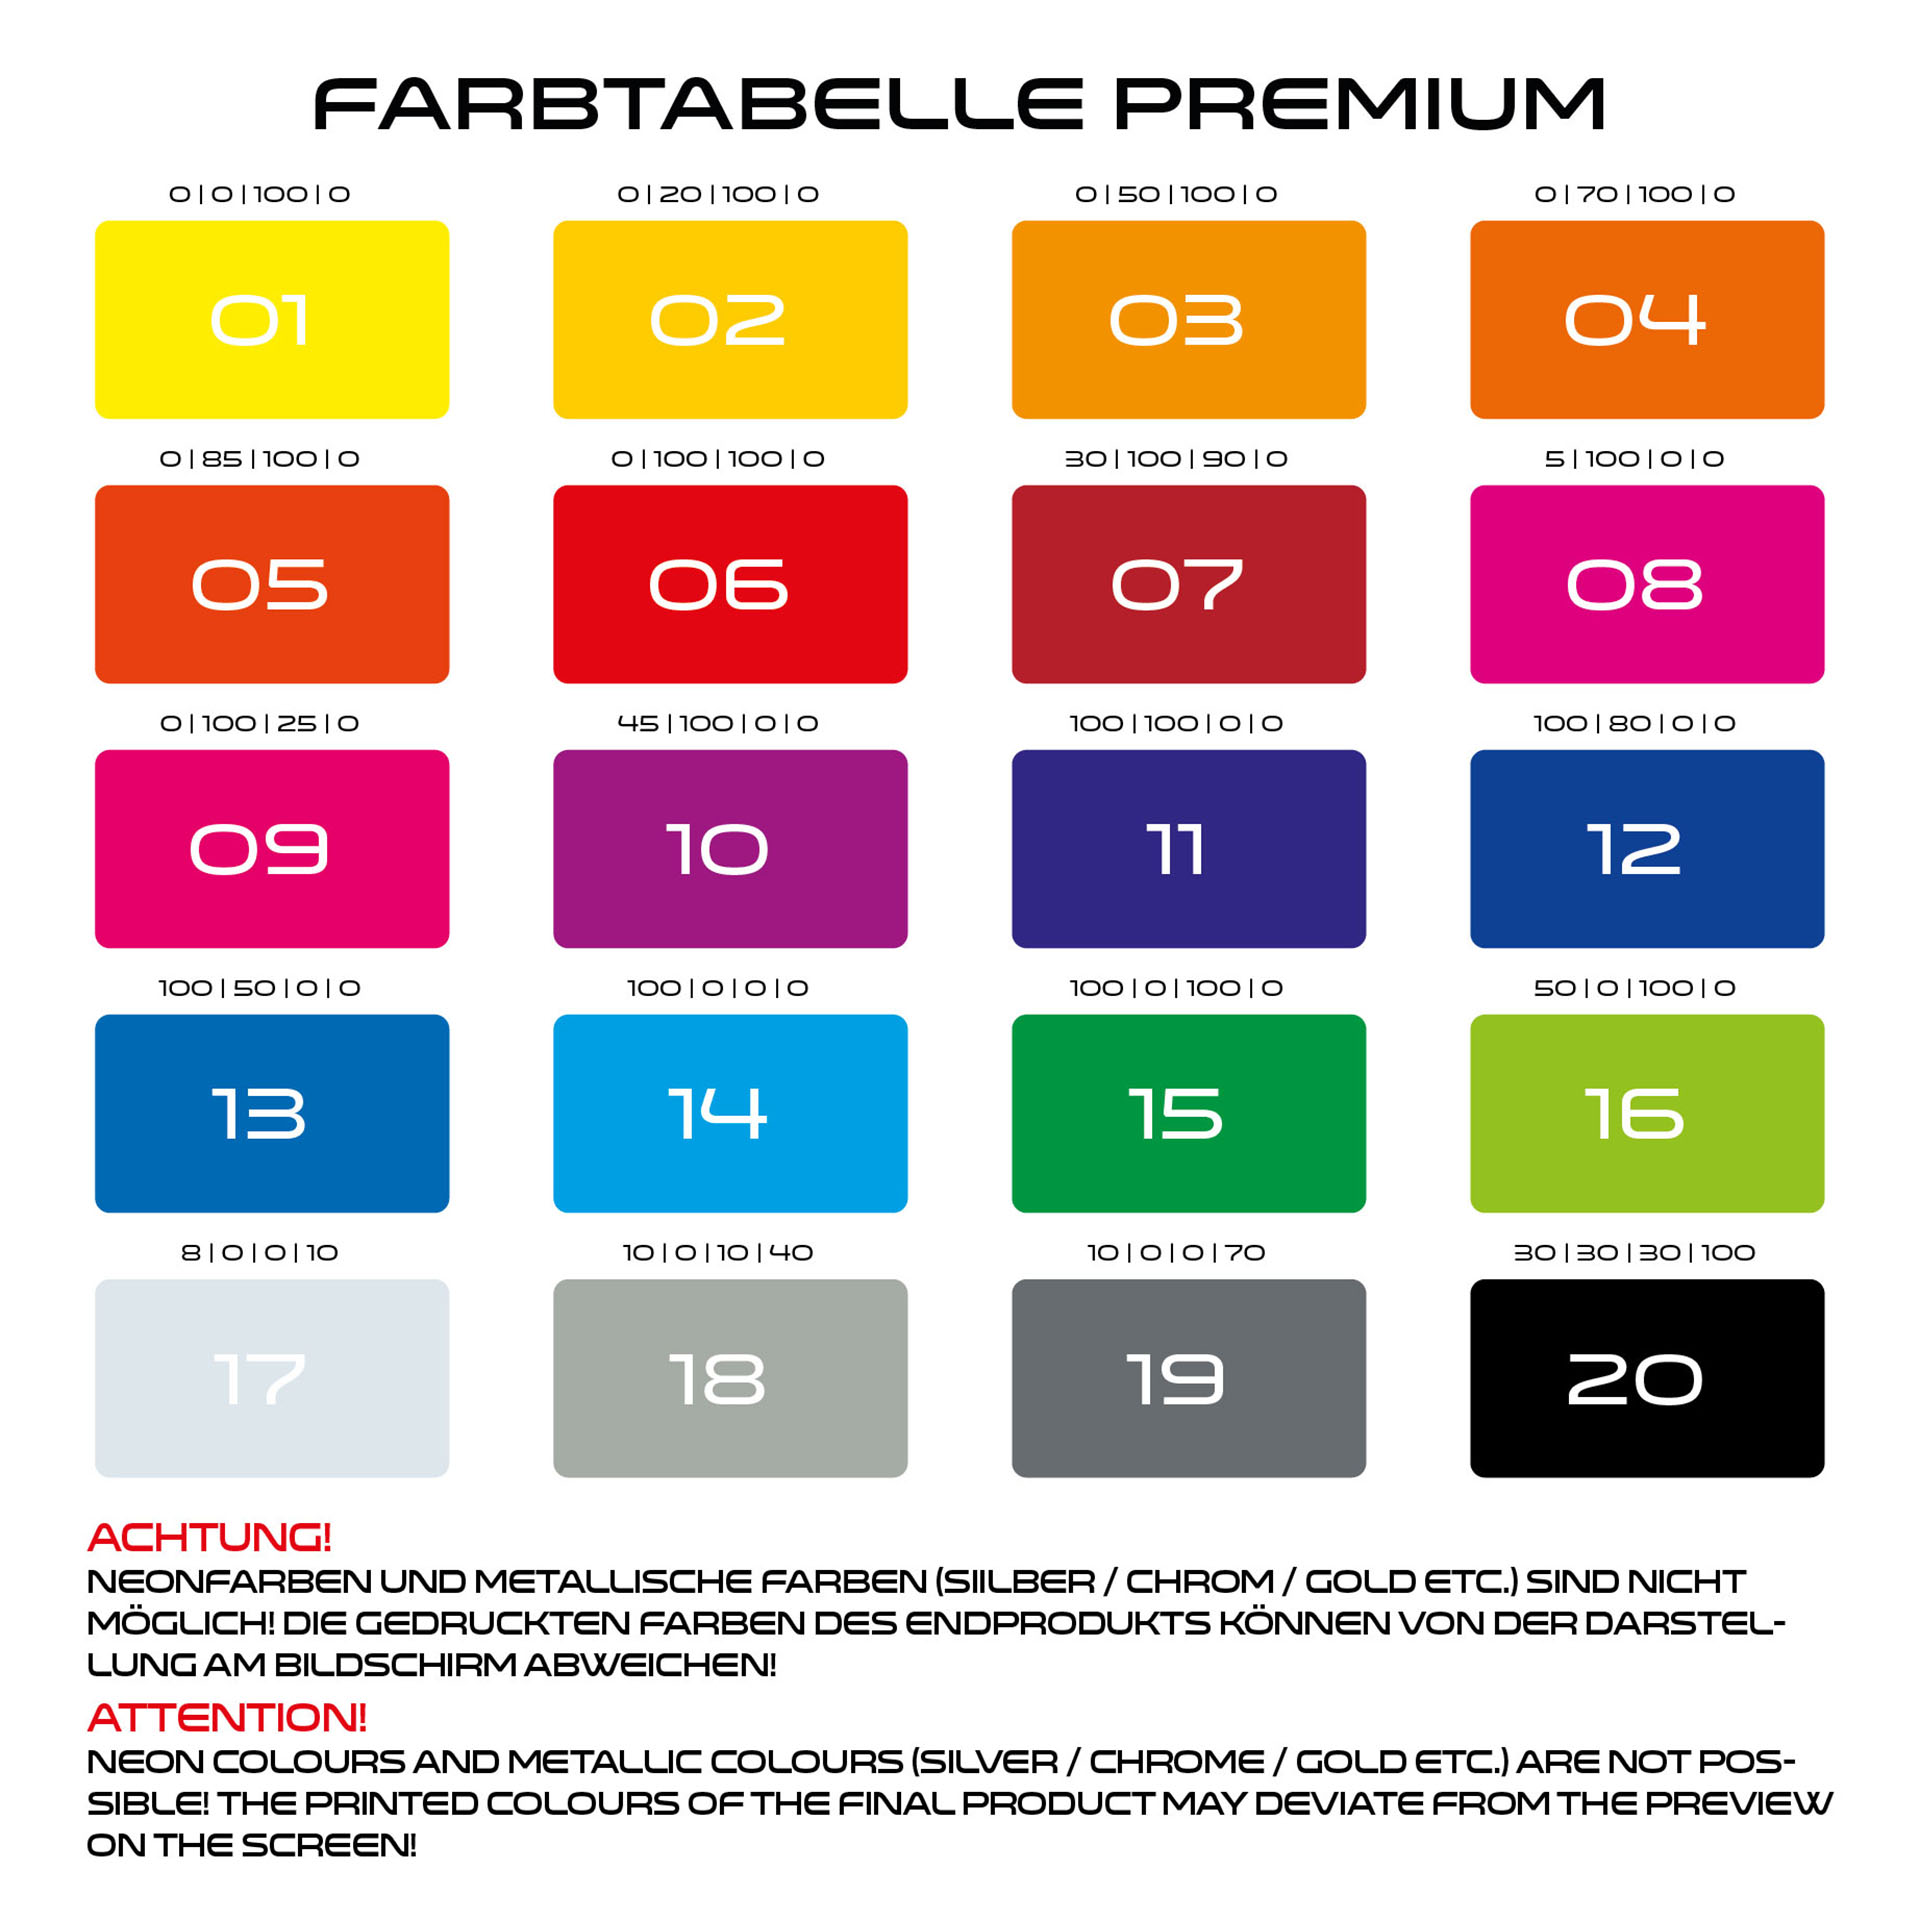 Renngrib V2 Felgenaufkleber Premium Farbtabelle Premium Wheelsticker